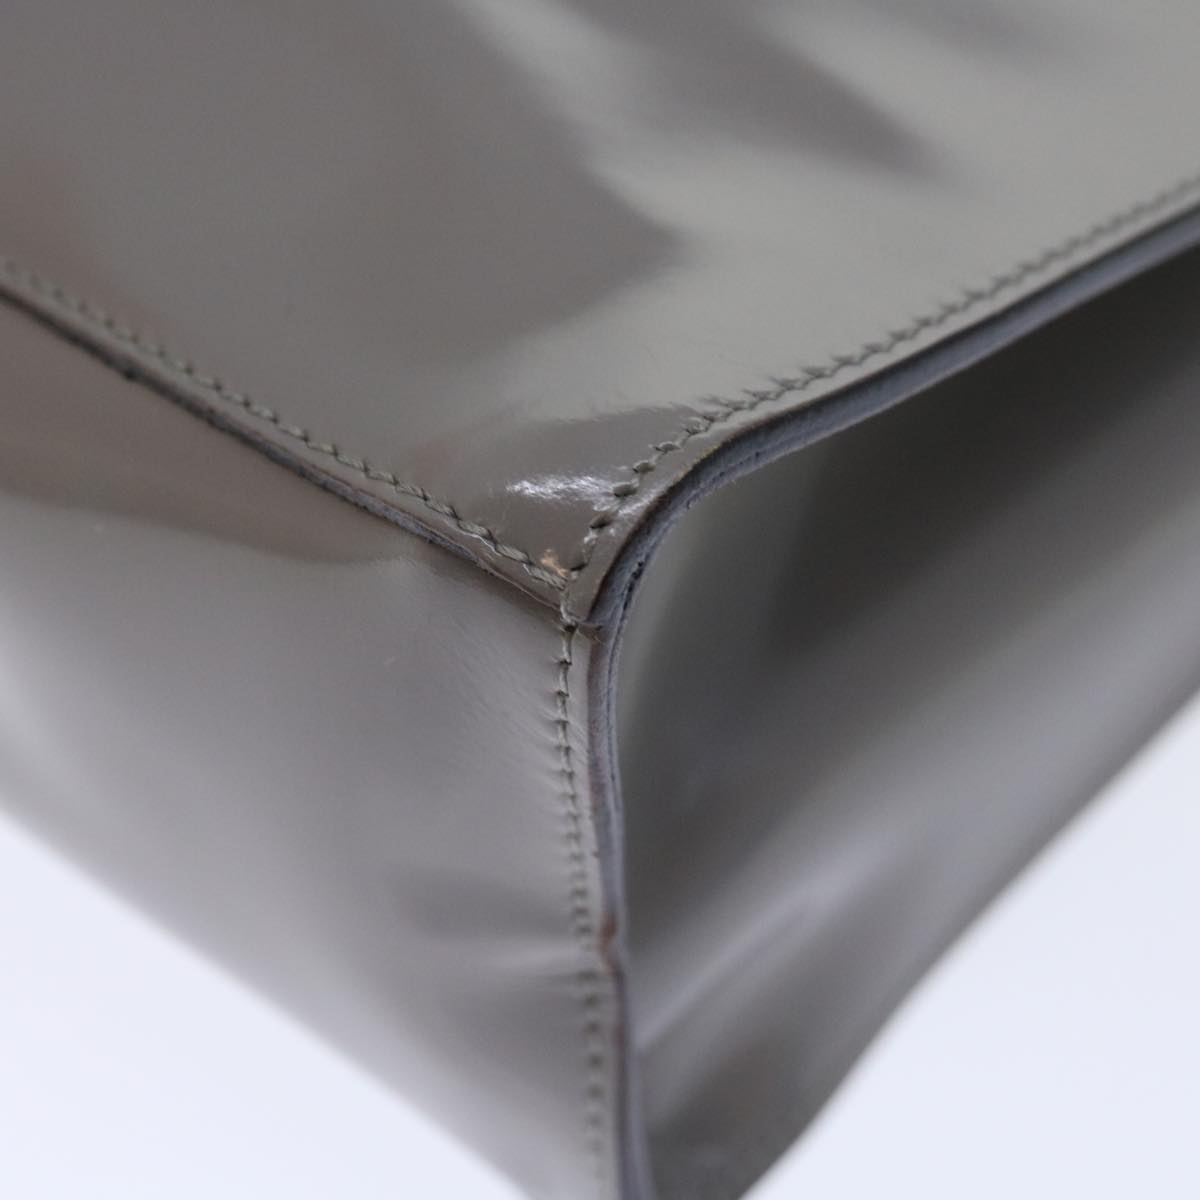 Salvatore Ferragamo Hand Bag Patent leather Gray Auth 70674